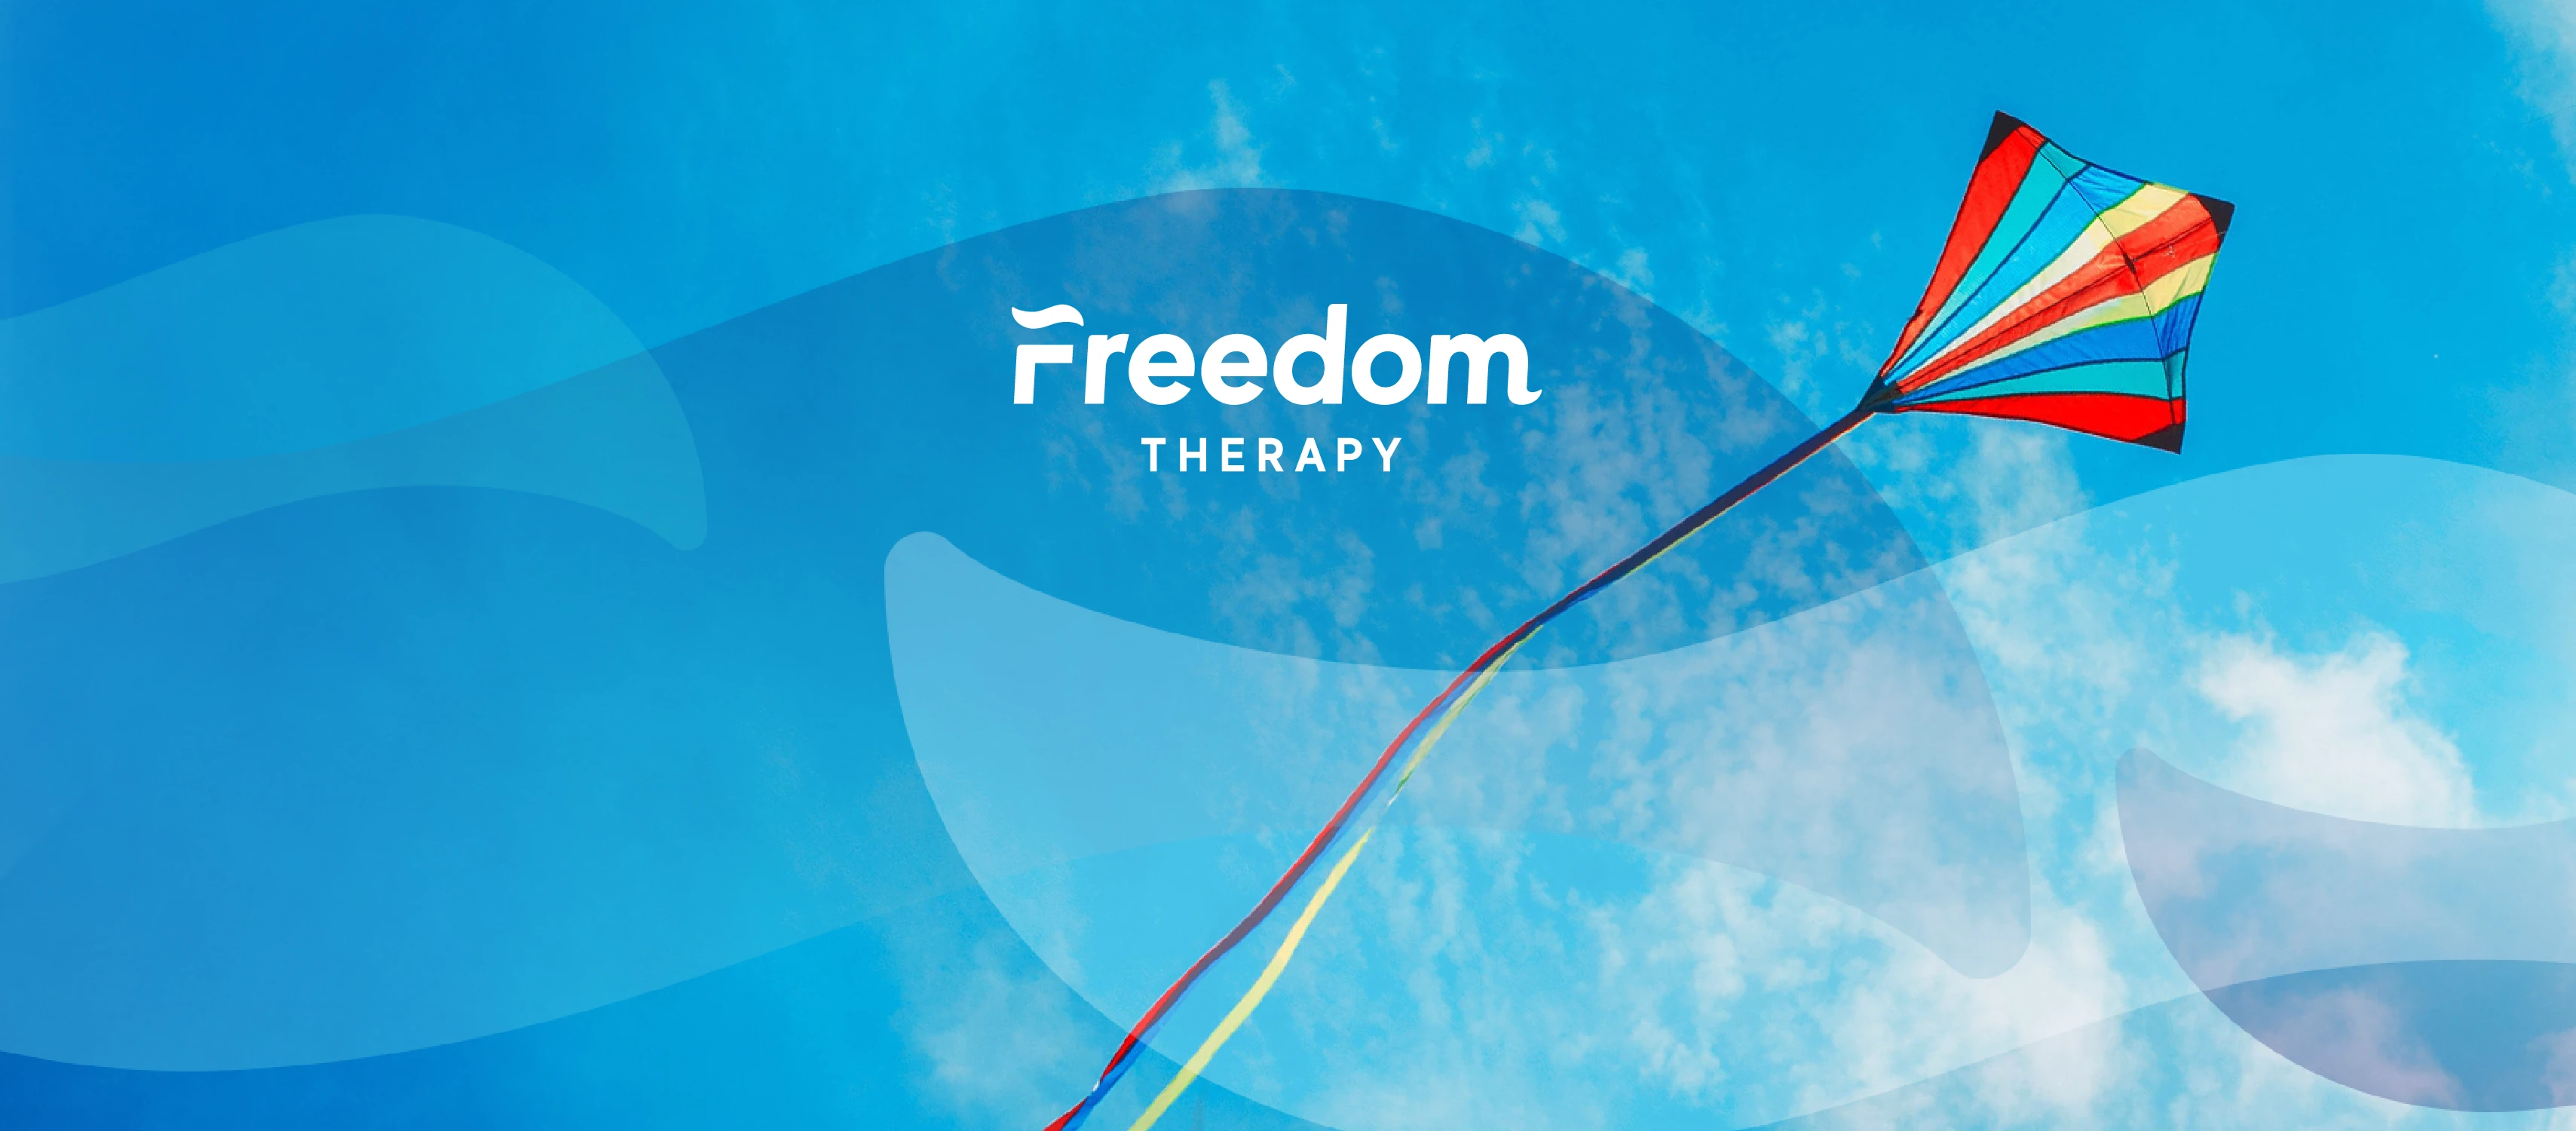 Freedom Therapy Ltd